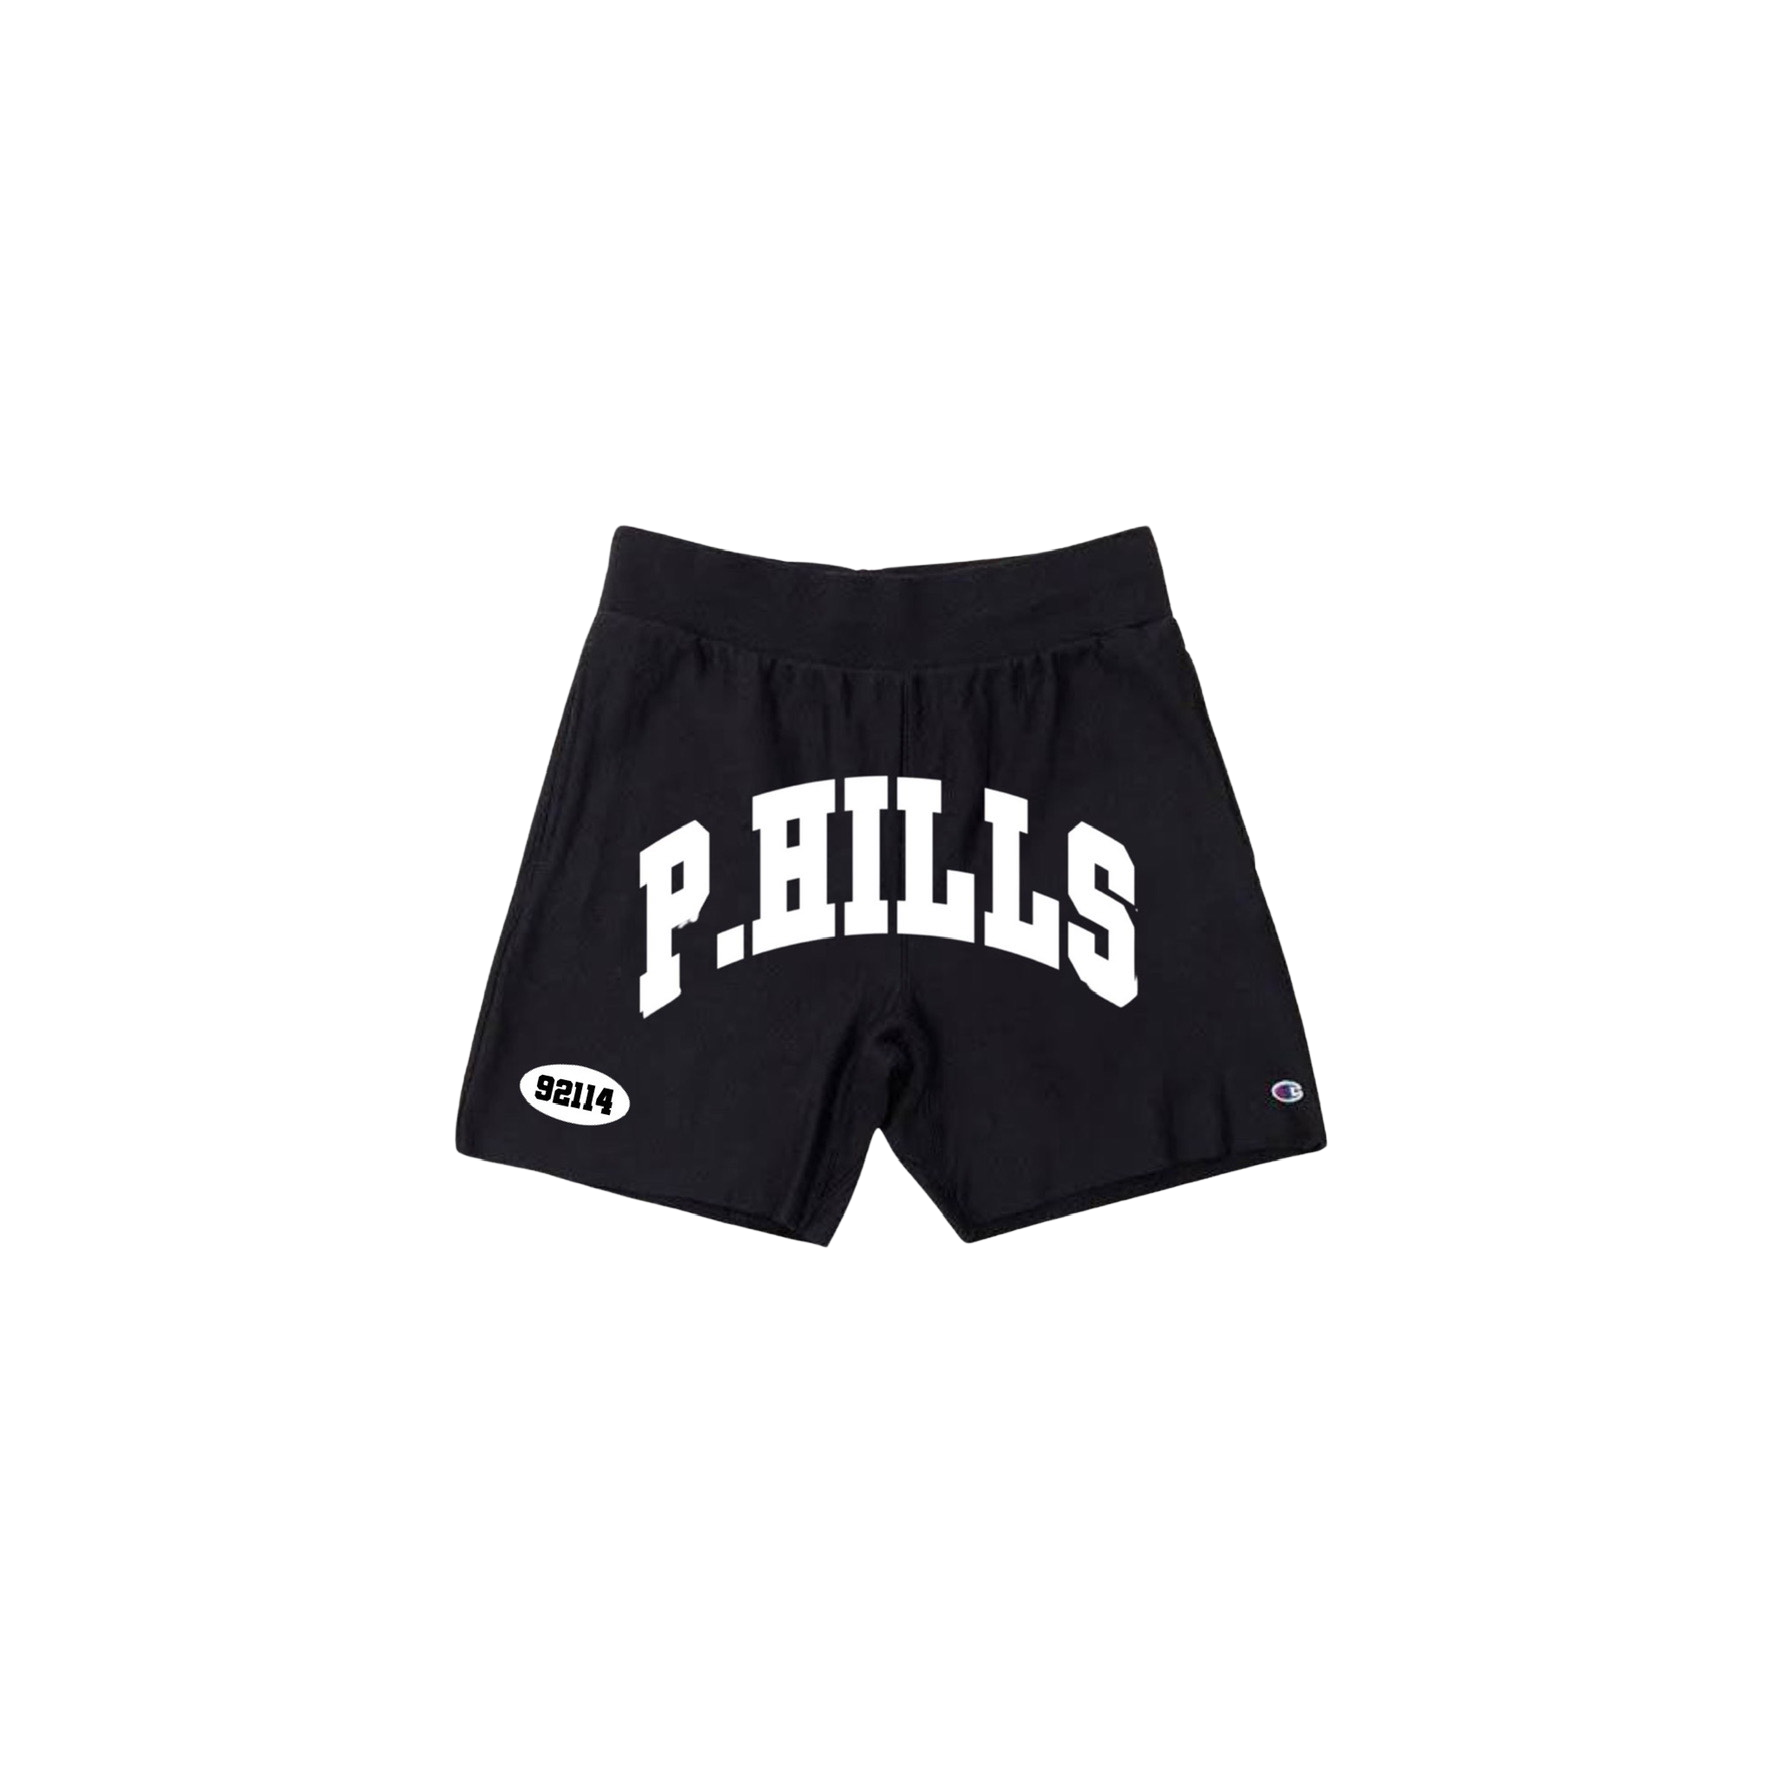 P.Hills team shorts